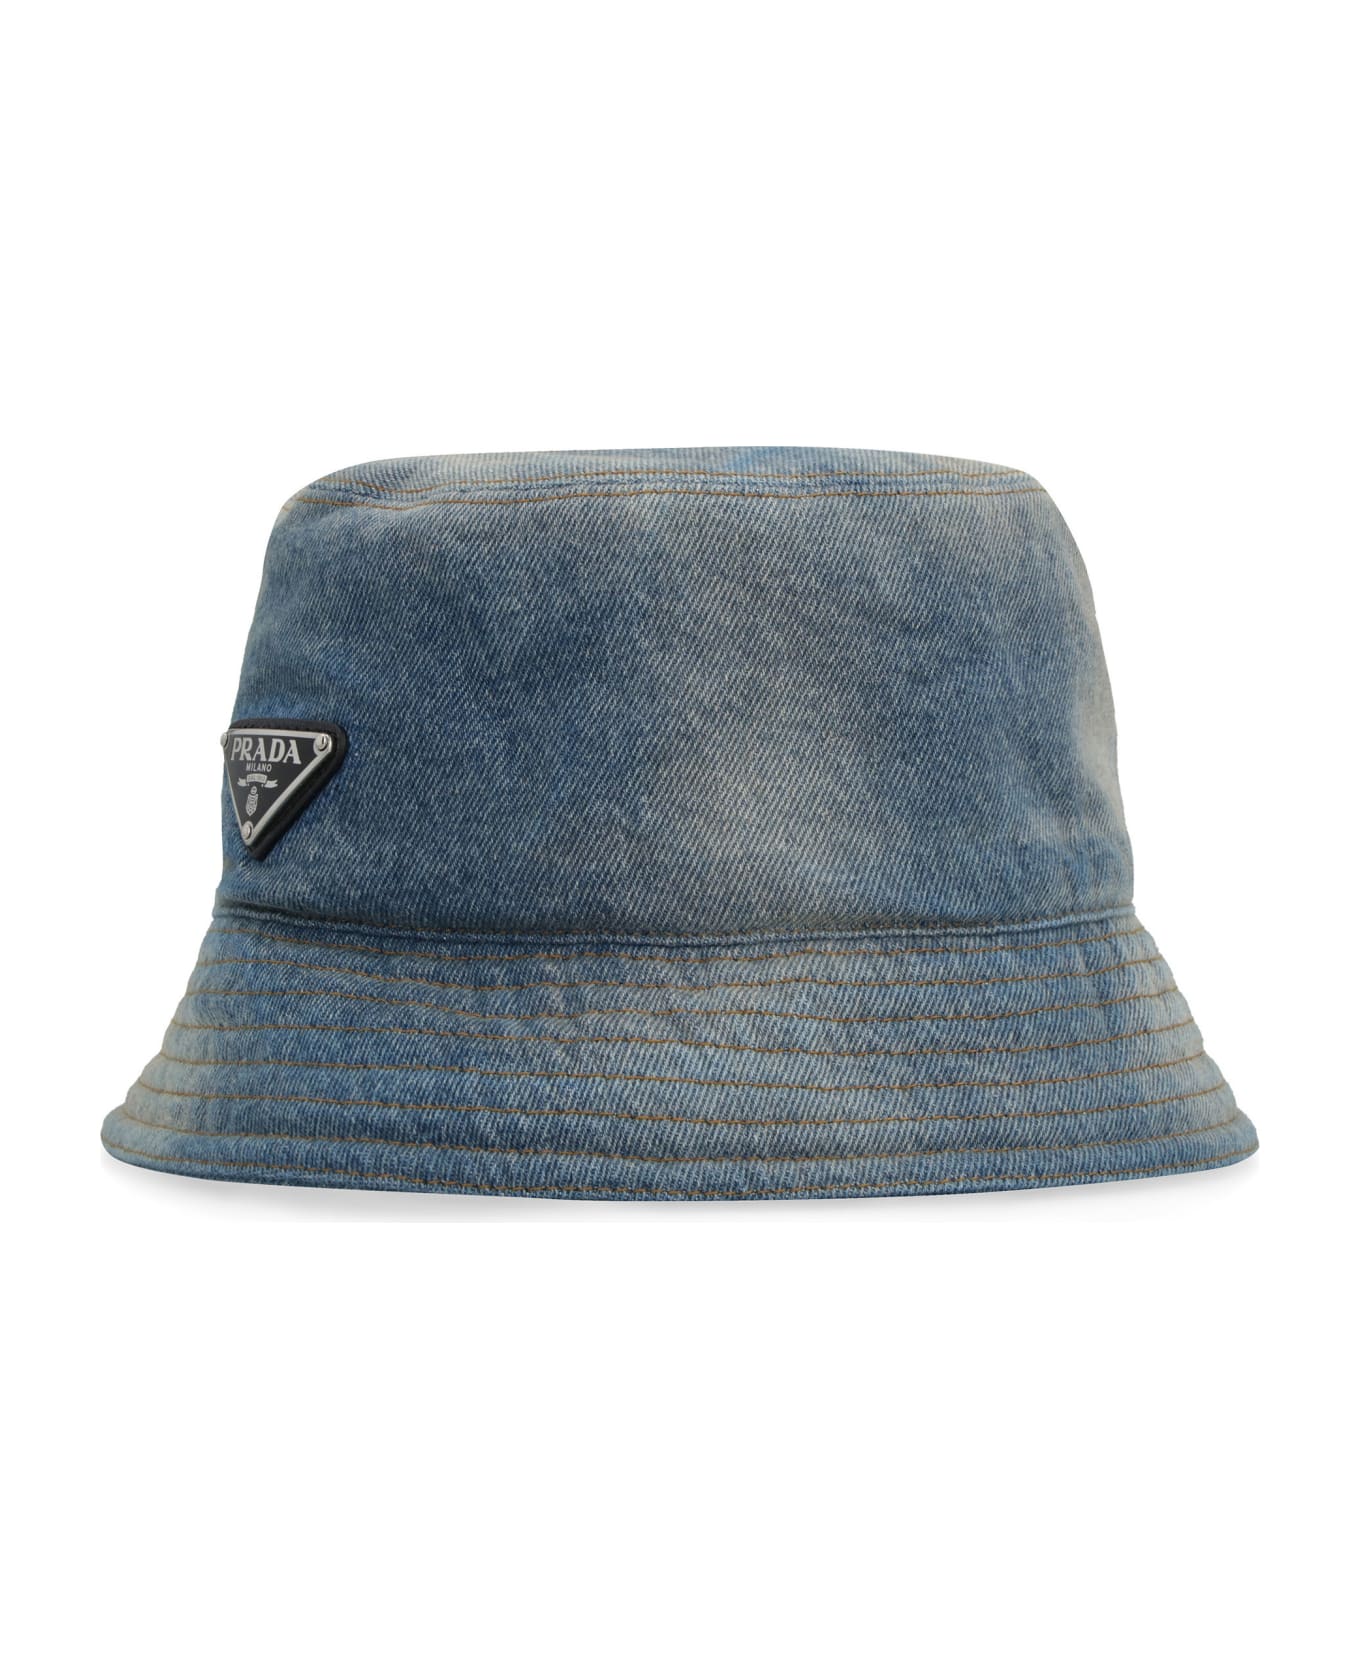 Prada Denim Bucket Hat - Blu